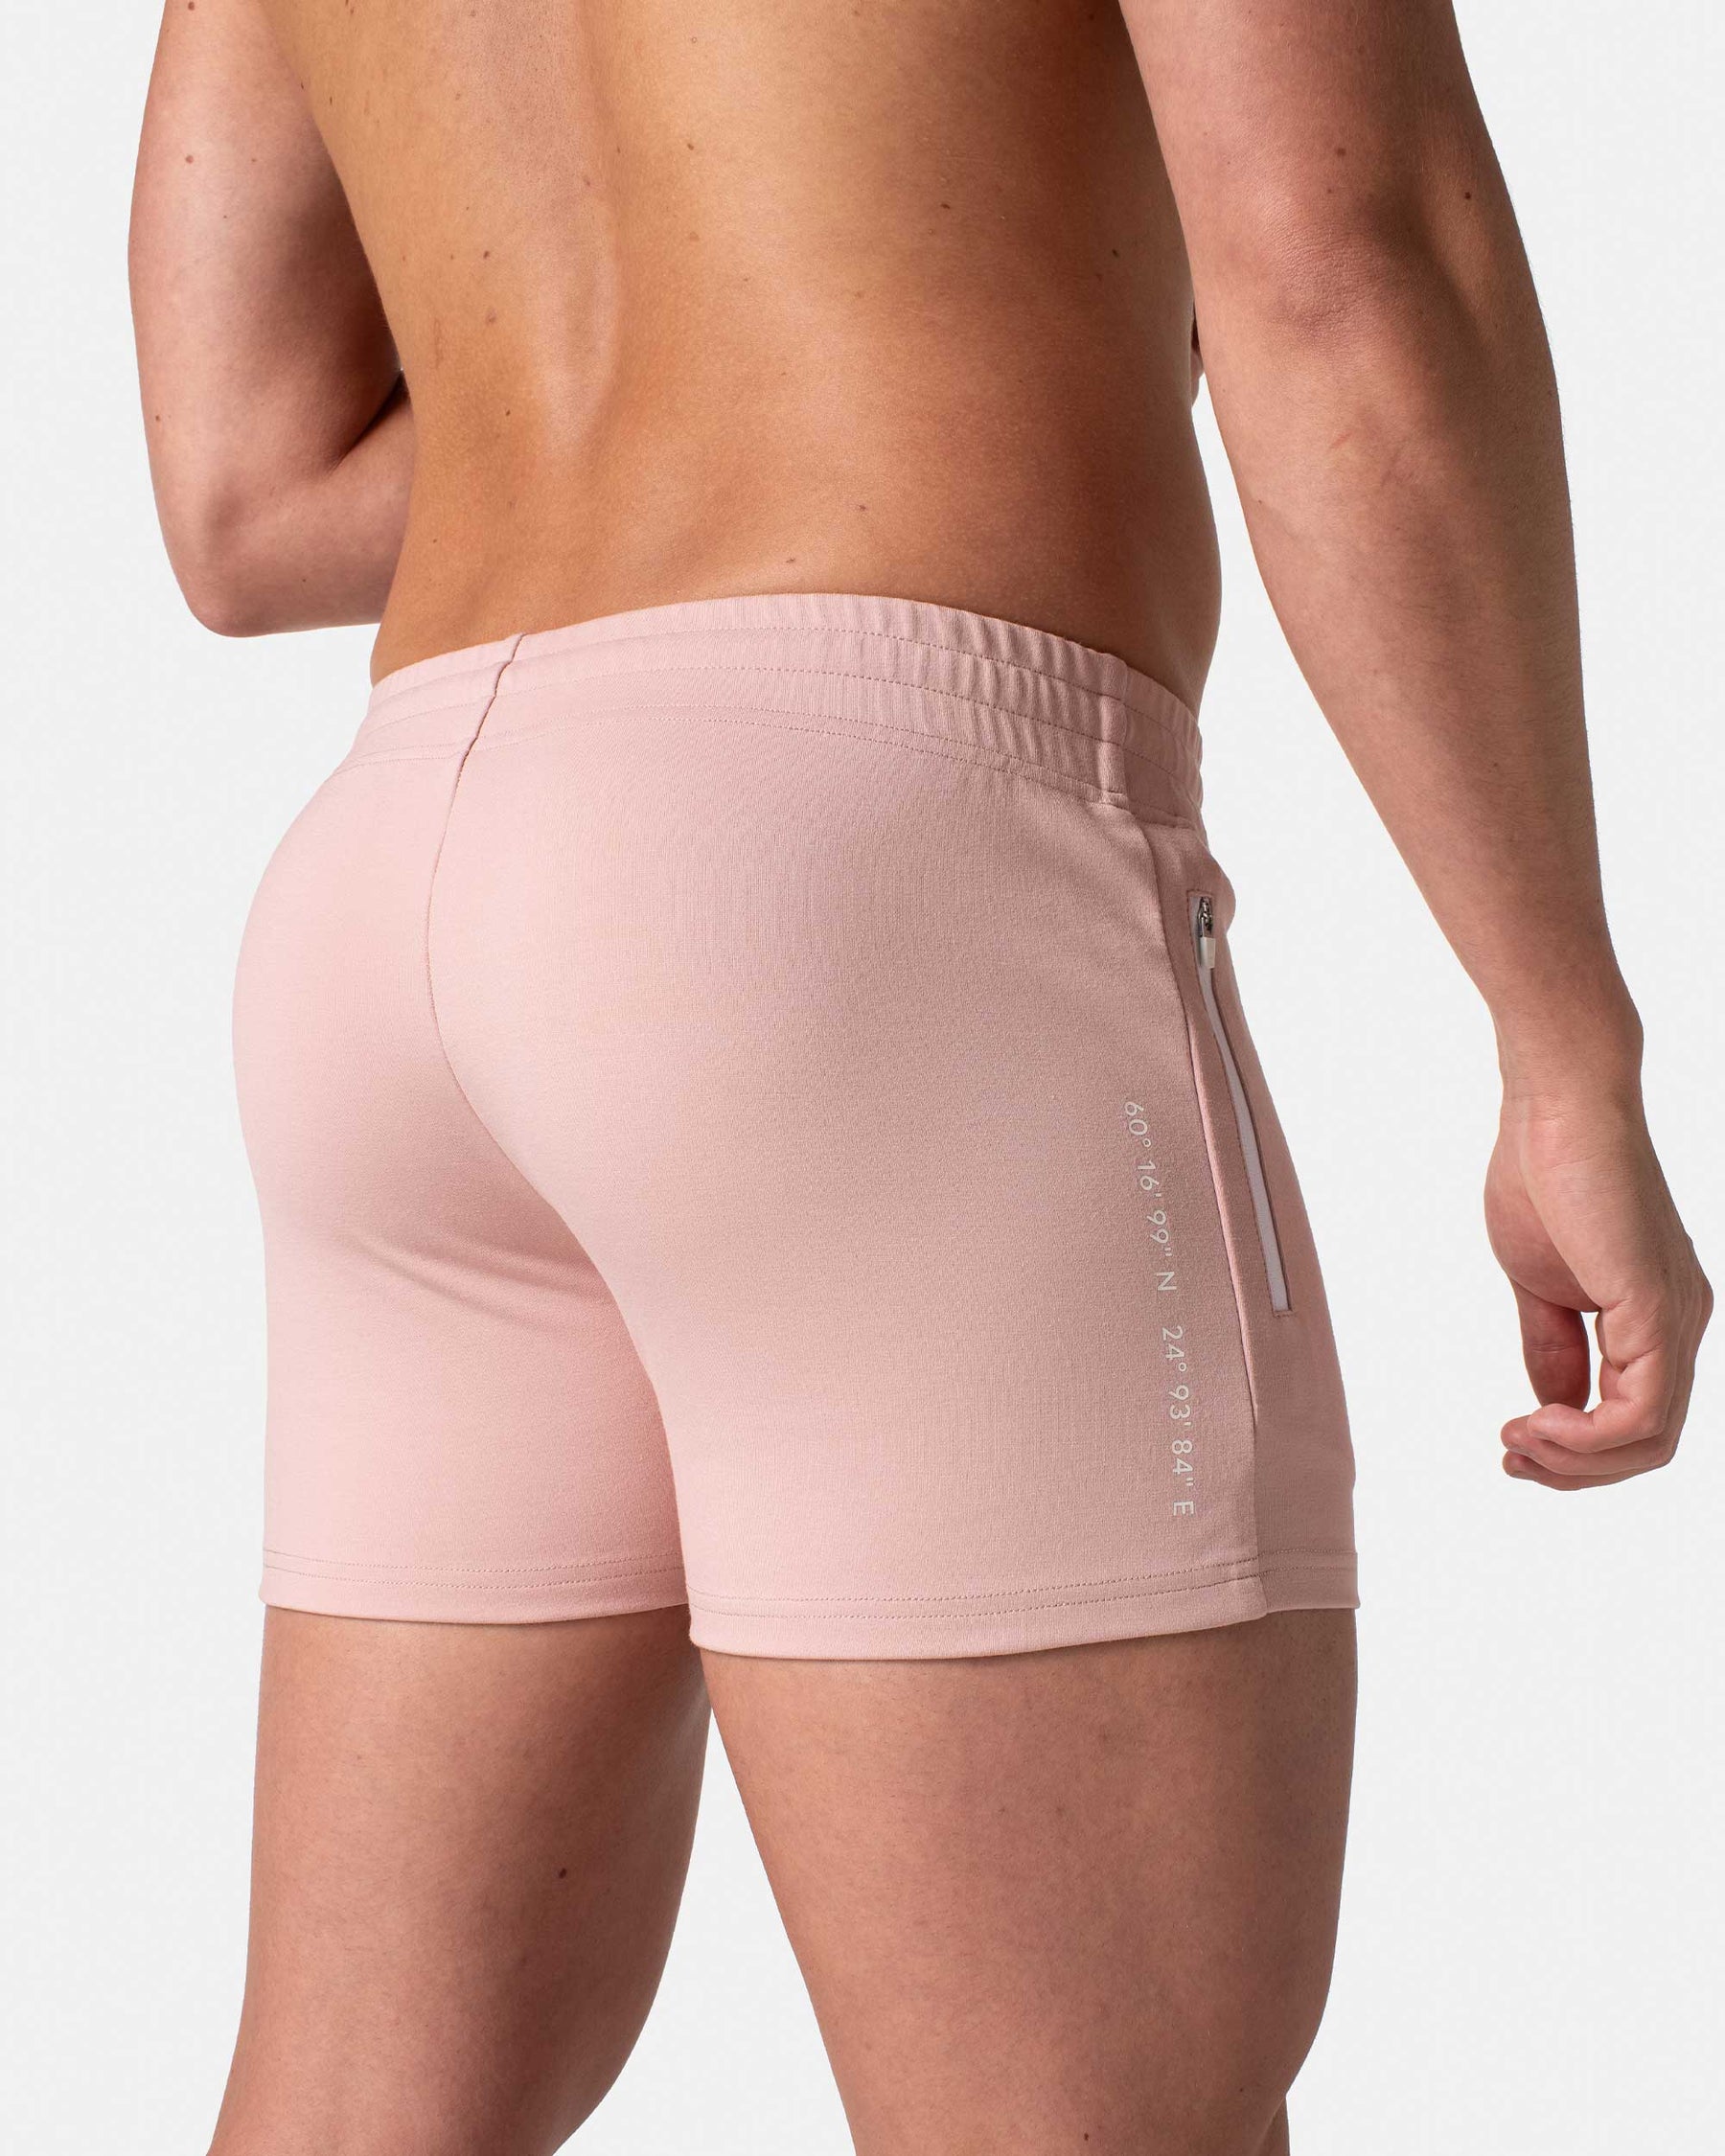 Squat 3.5" Shorts - Dusty Pink